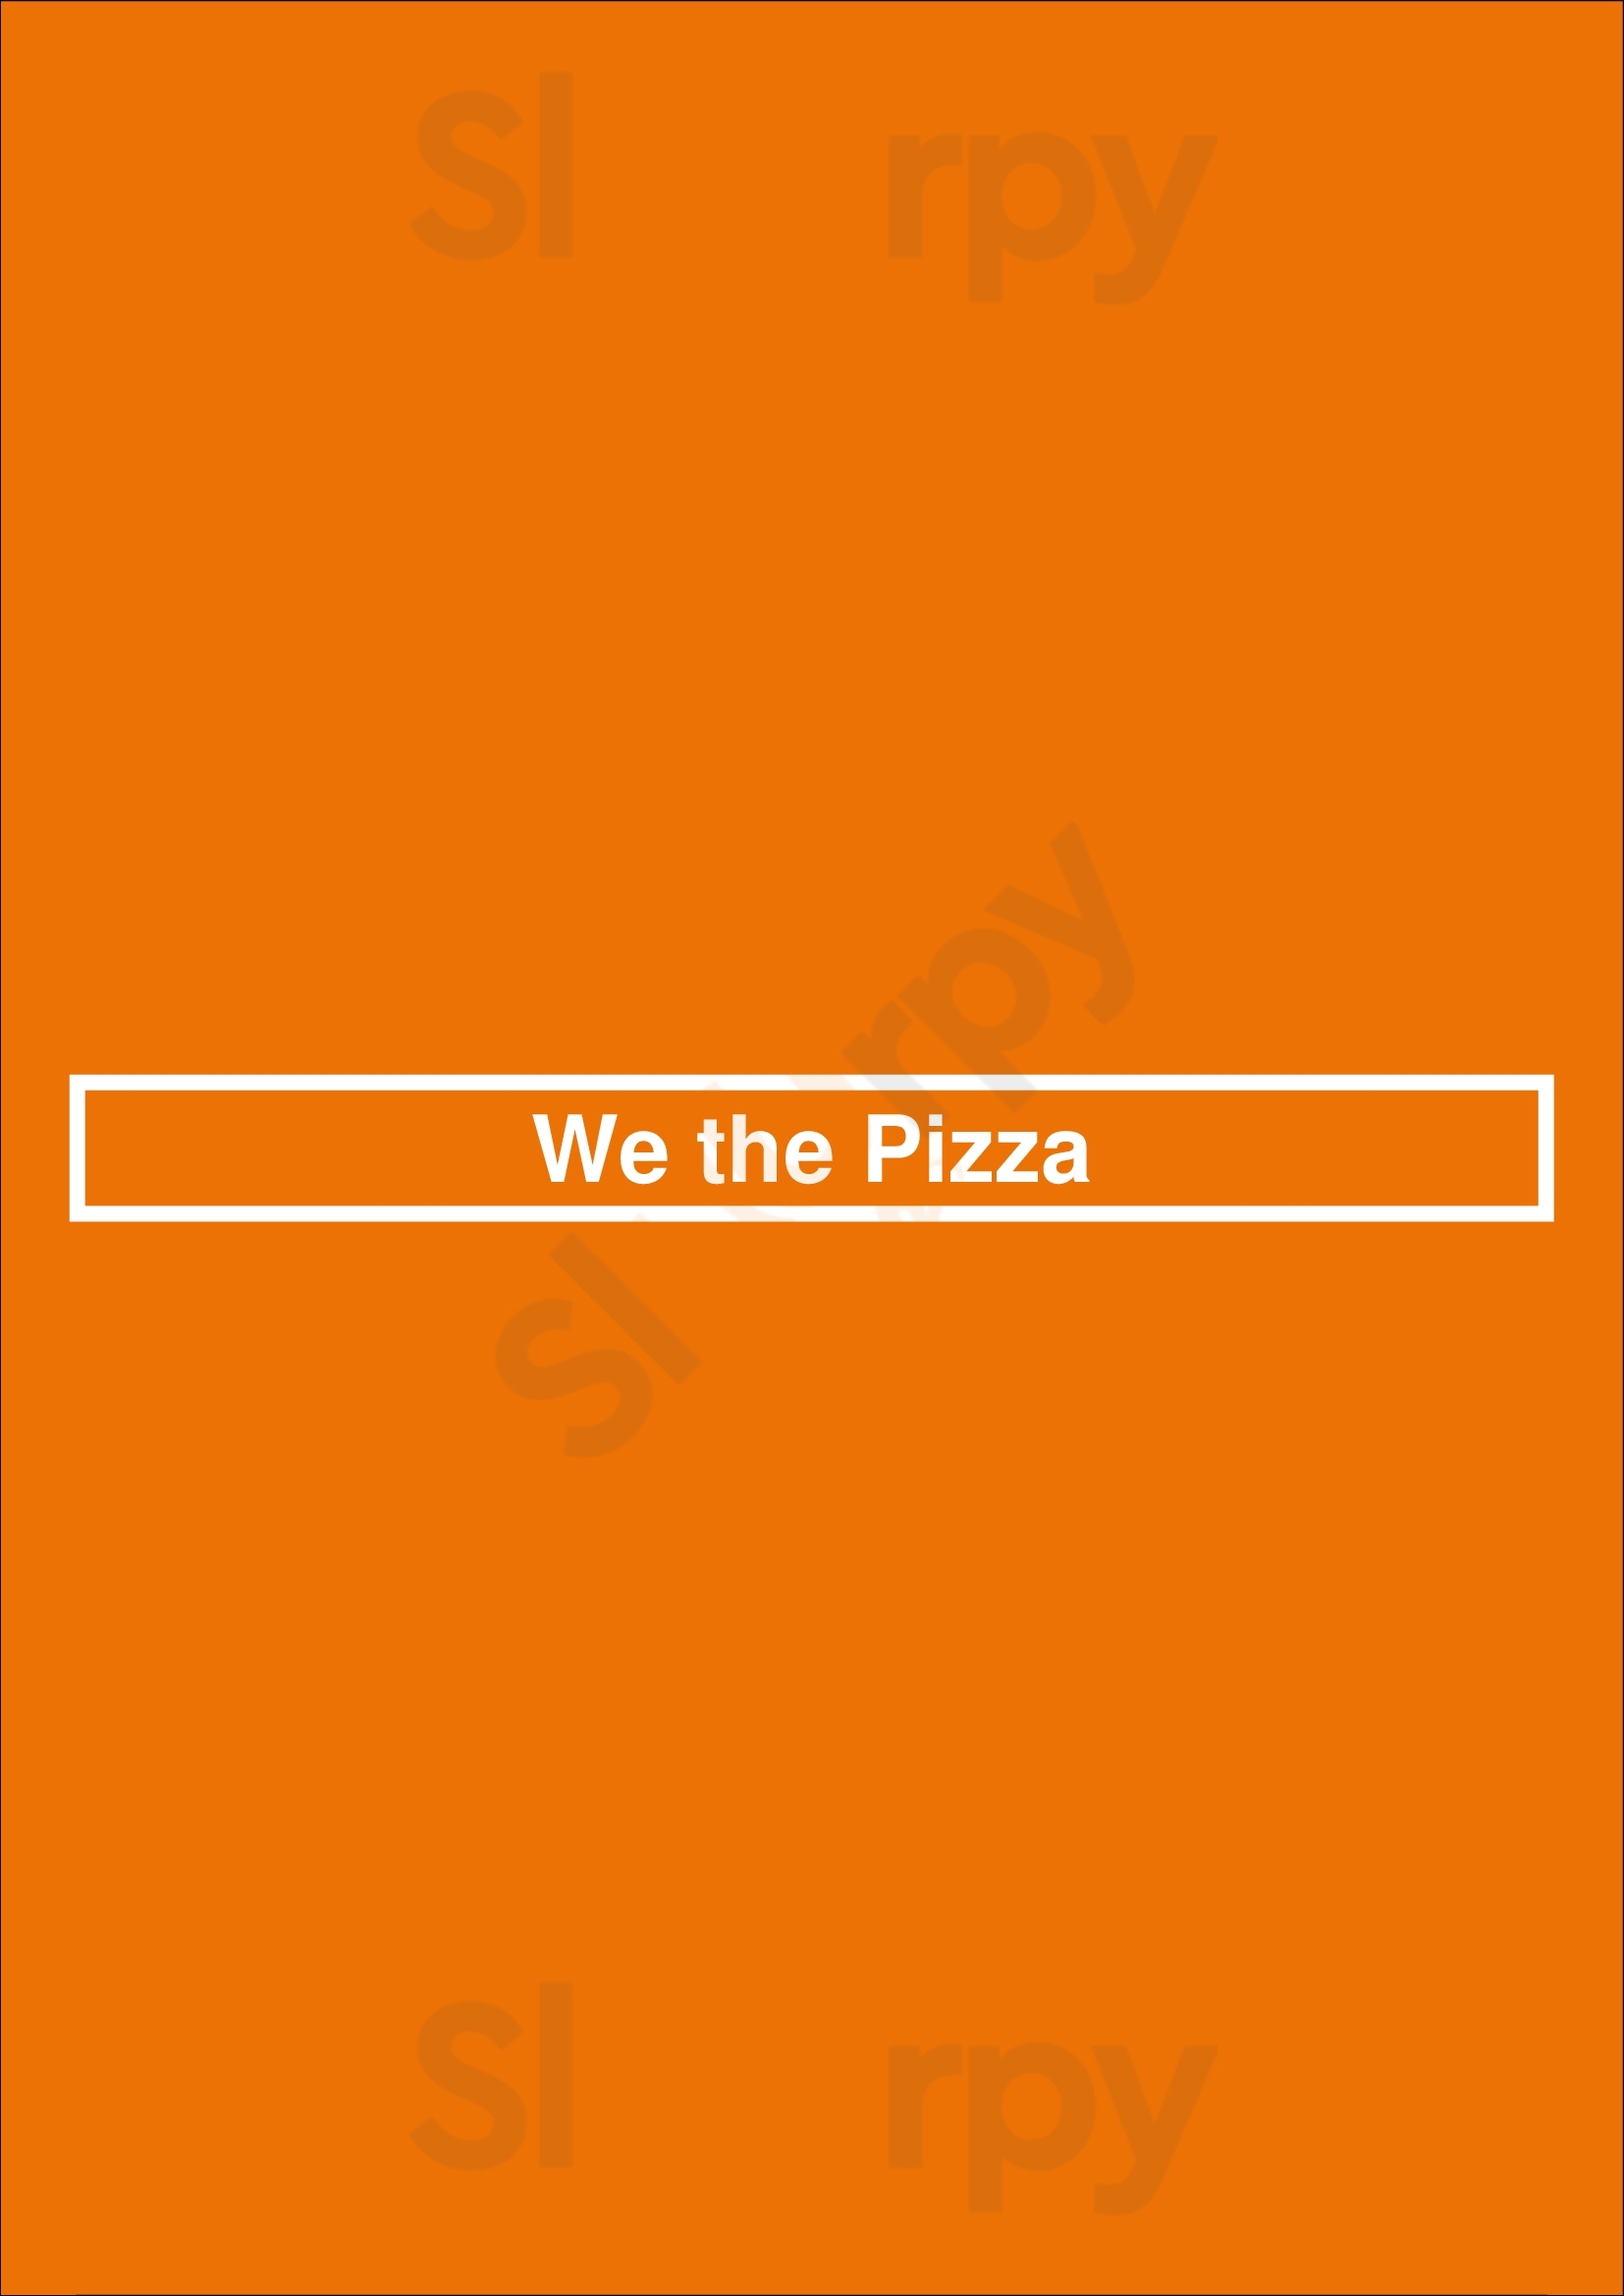 We The Pizza Washington DC Menu - 1